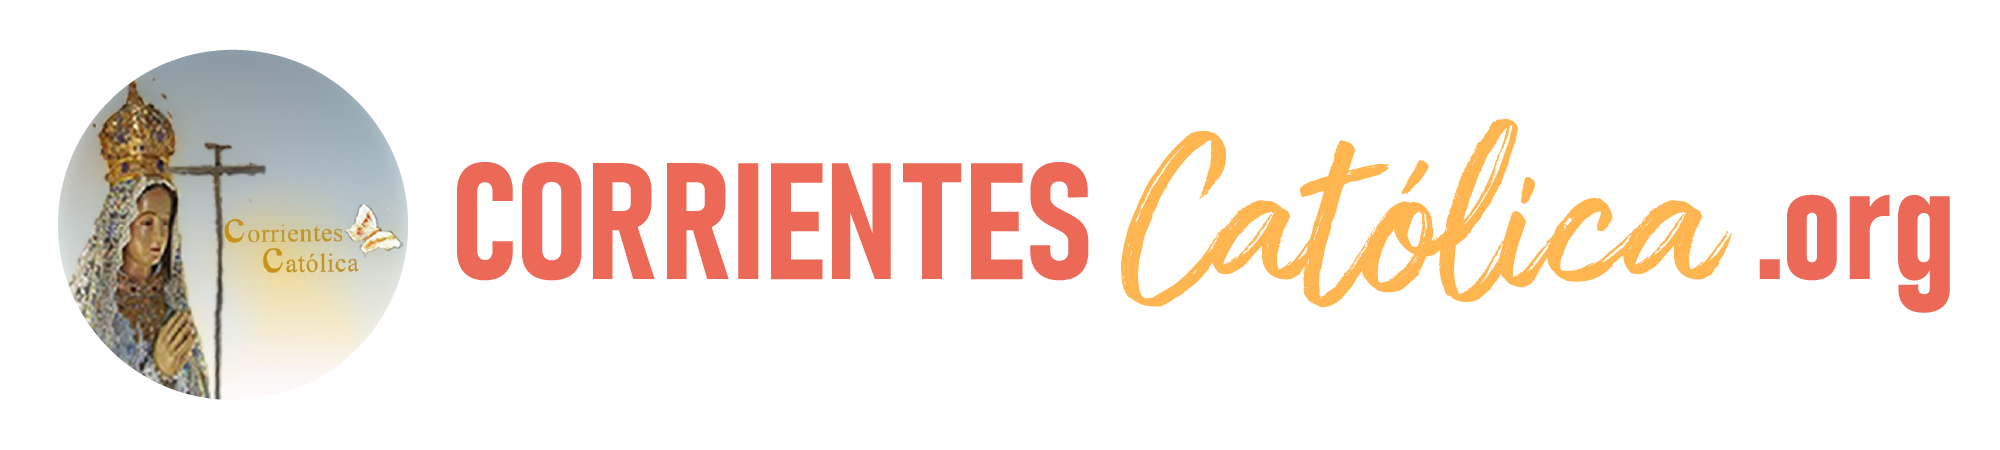 Corrientes Católica